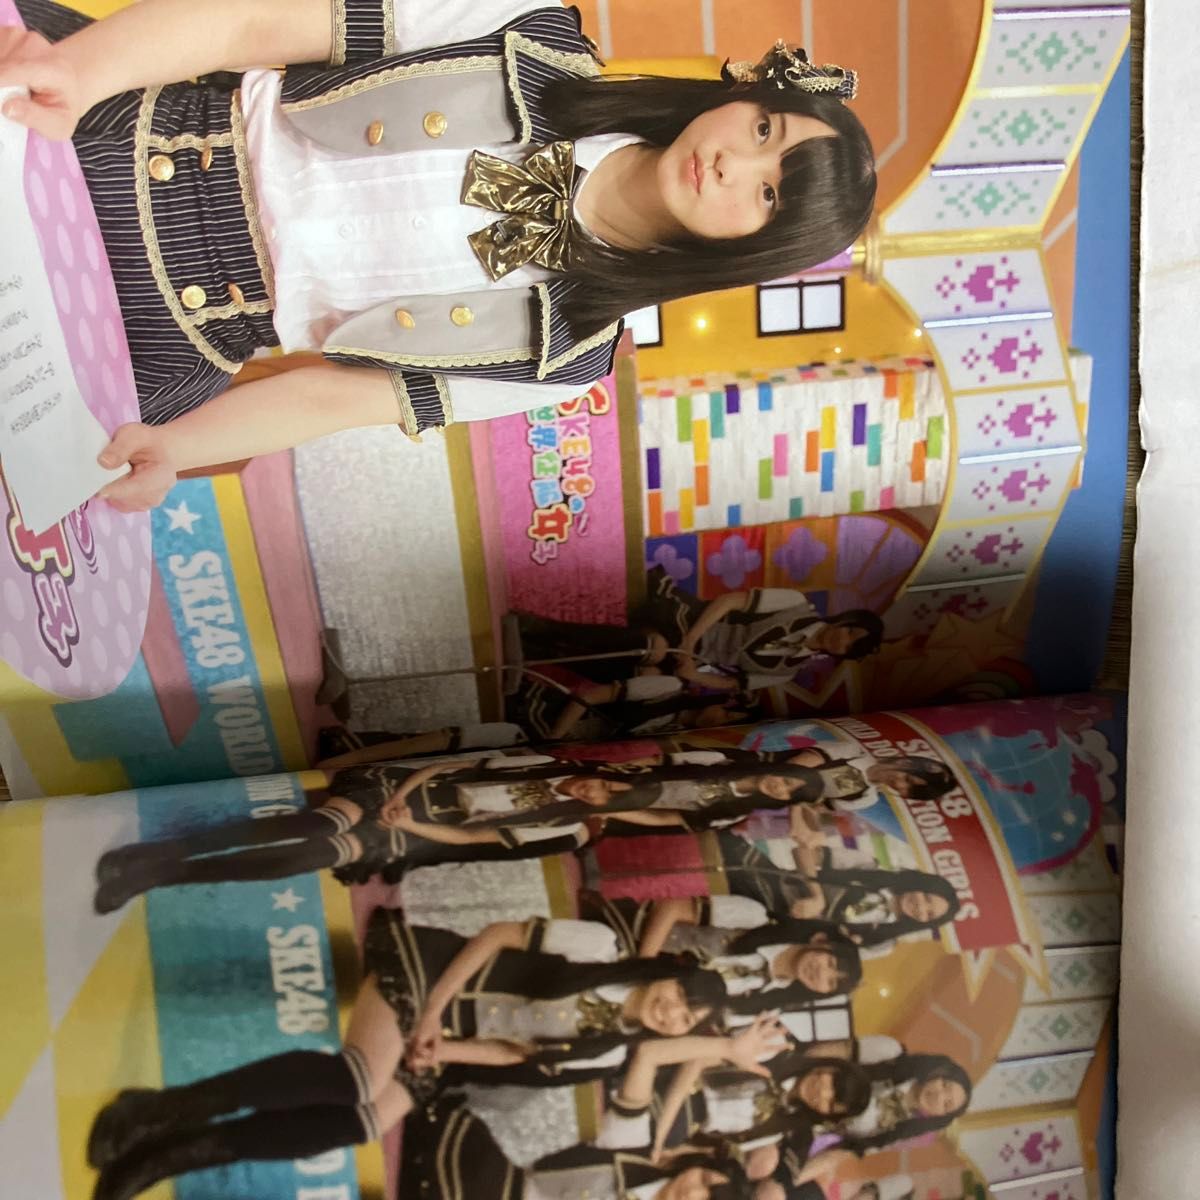 SKE48 4DVD/SKE48の世界征服女子 初回限定豪華版 14/1/10発売 オリコン加盟店